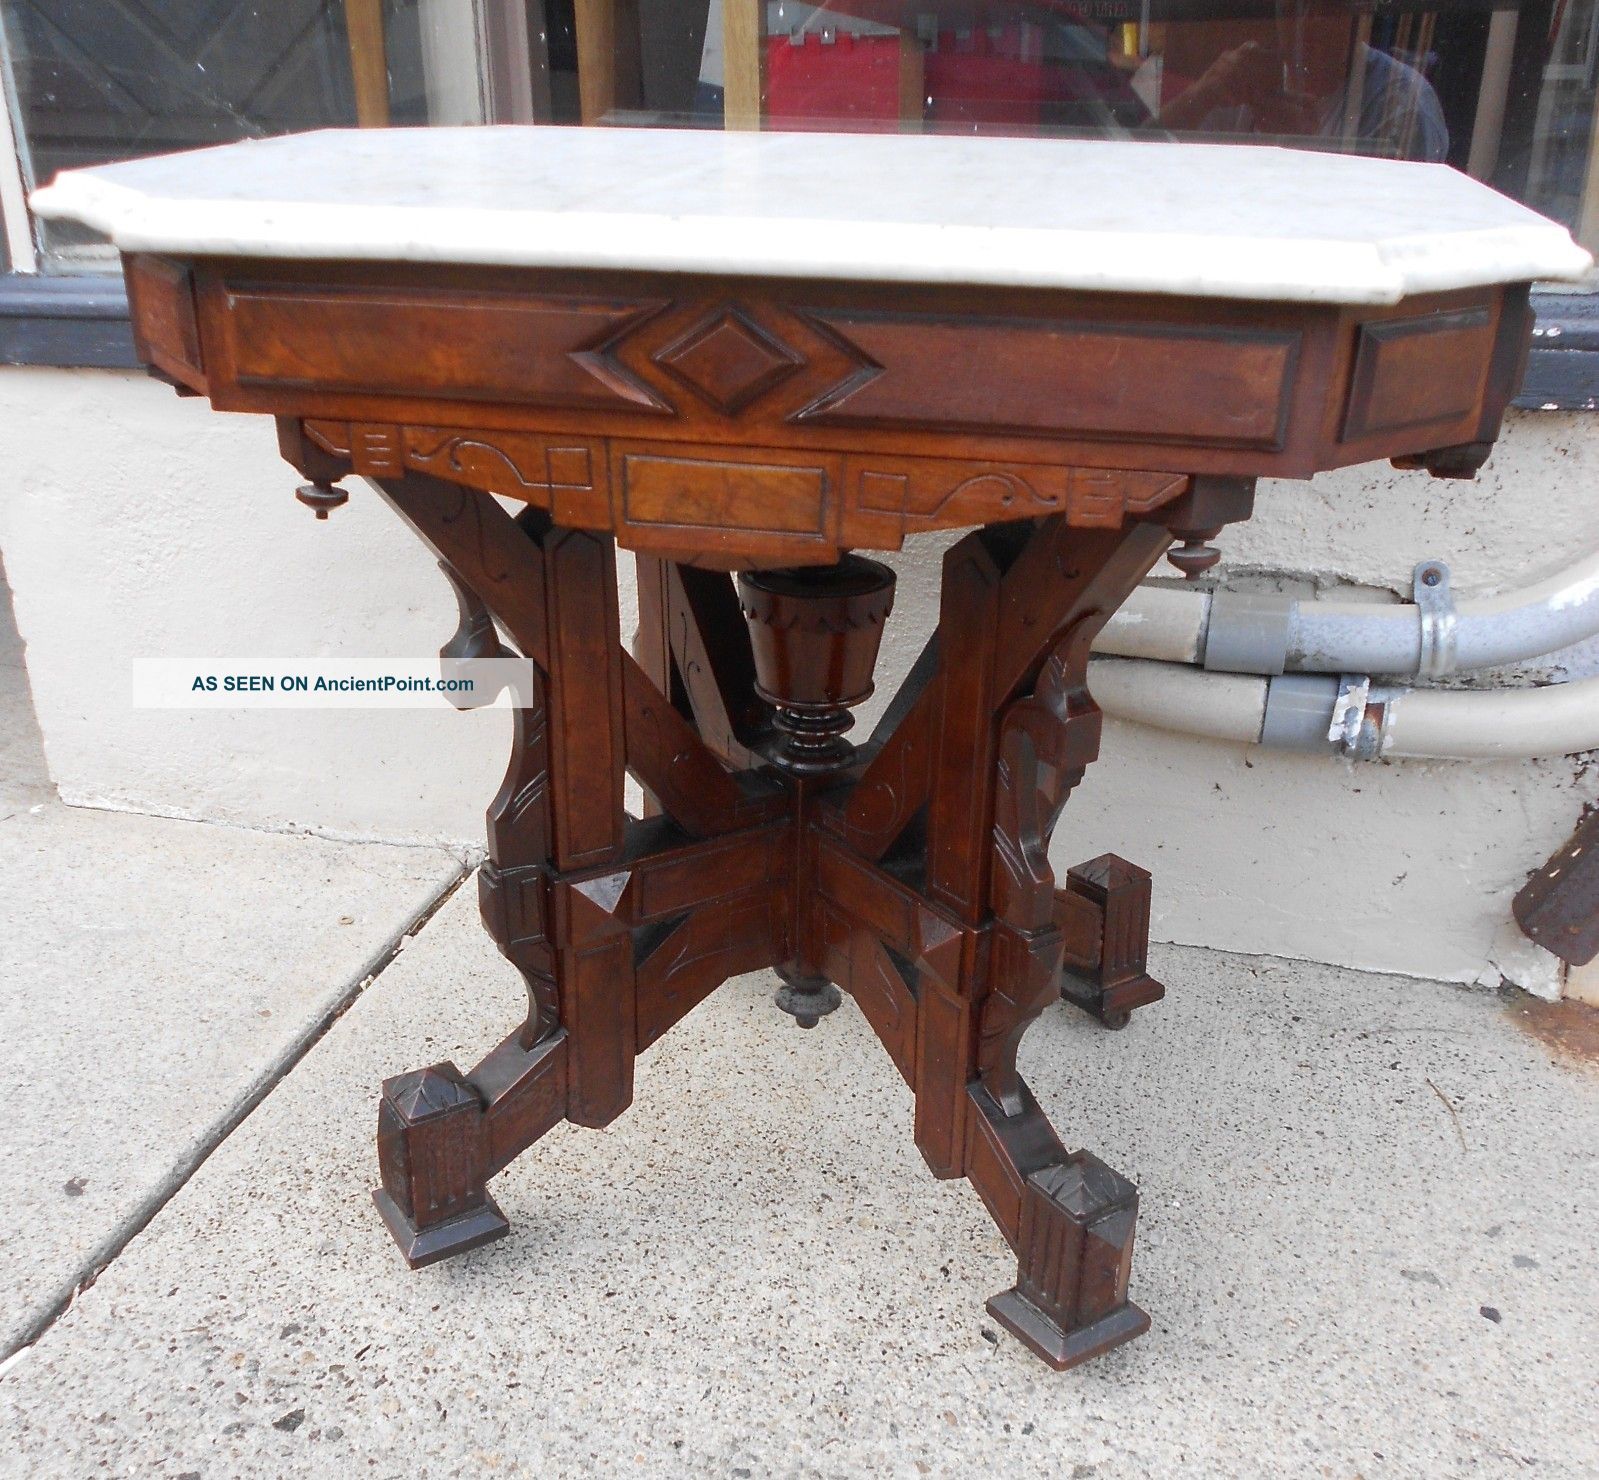 Victorian Eastlake Renaissance Revival Marble Top Table W Carved Walnut Base,Haworthia Succulent